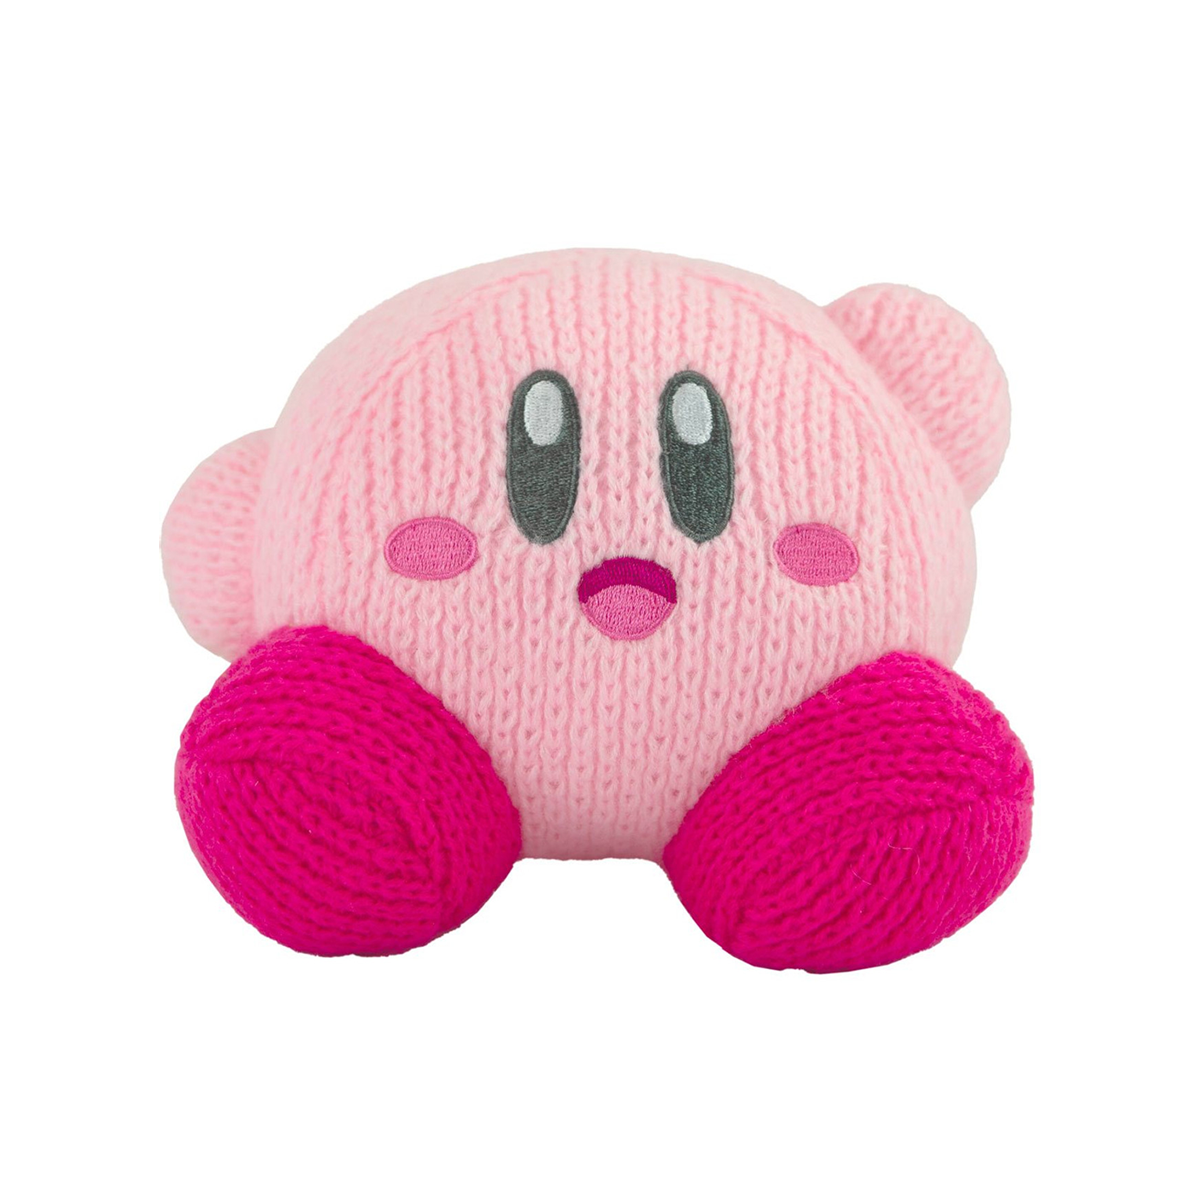 Kirby Nuiguru-Knit - 6 Inch Plush